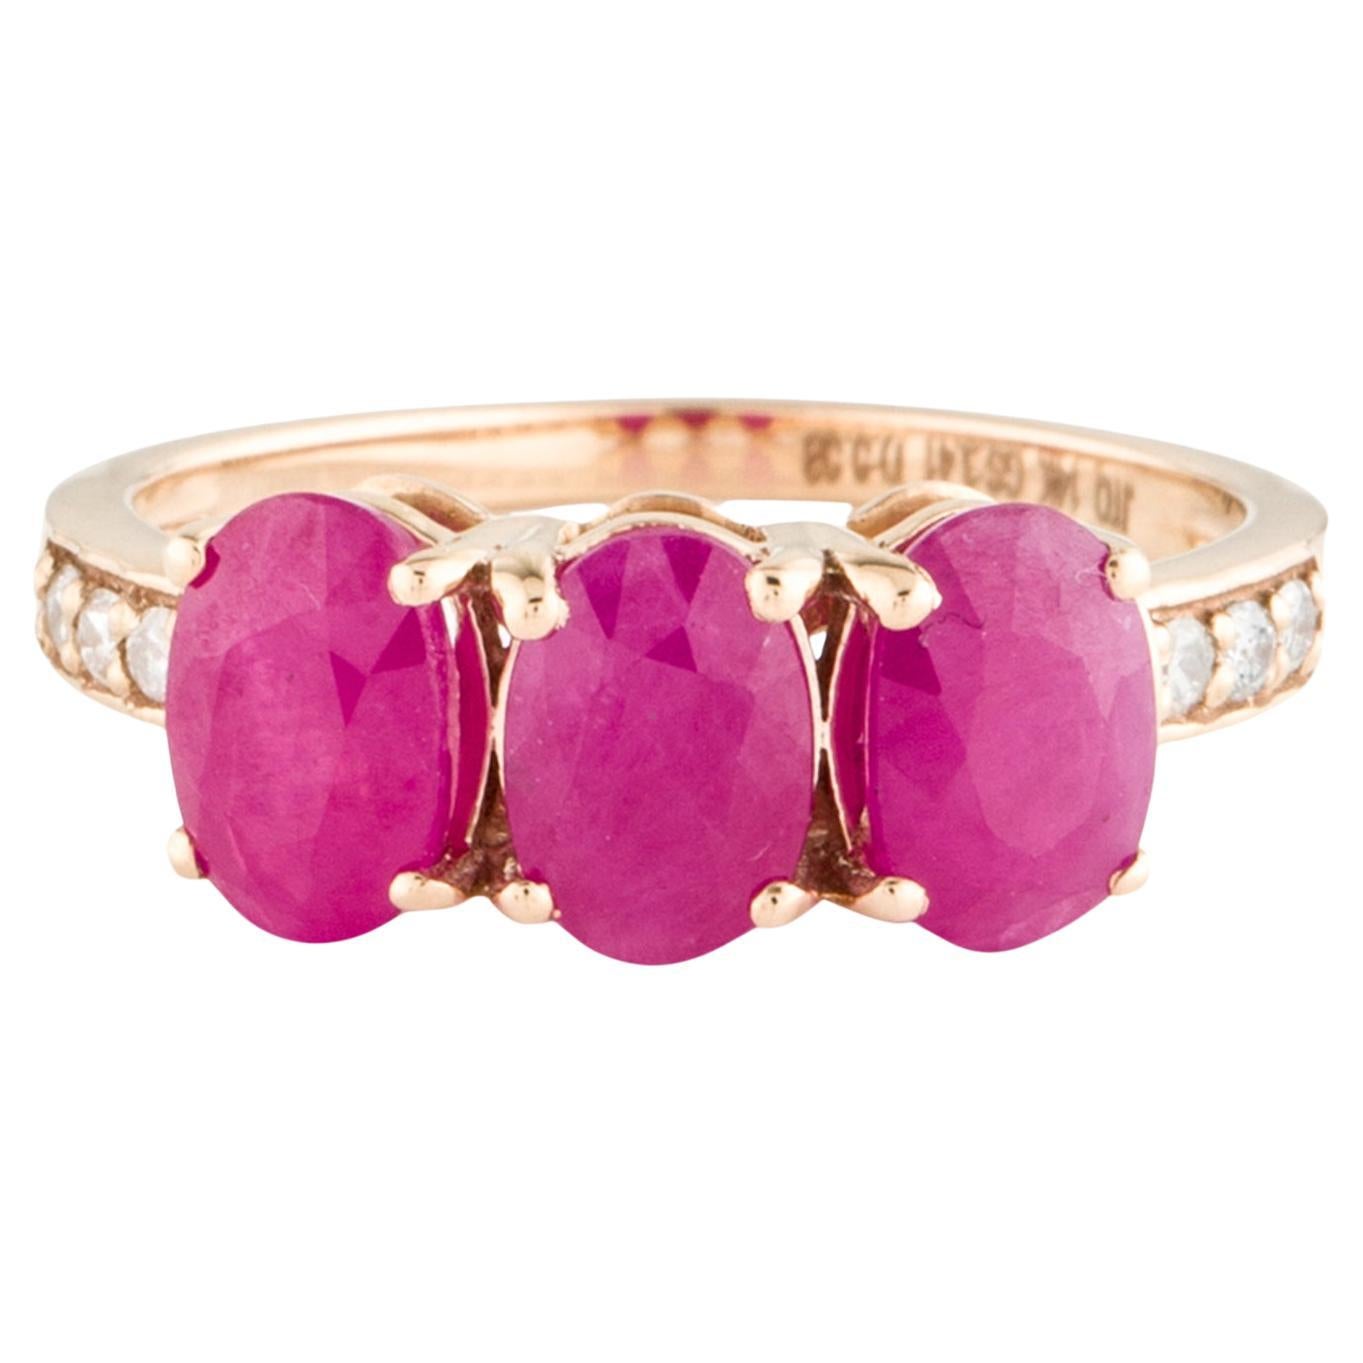 Luxurious 14K Ruby & Diamond Cocktail Band Ring - Size 6.75 - Statement Jewelry